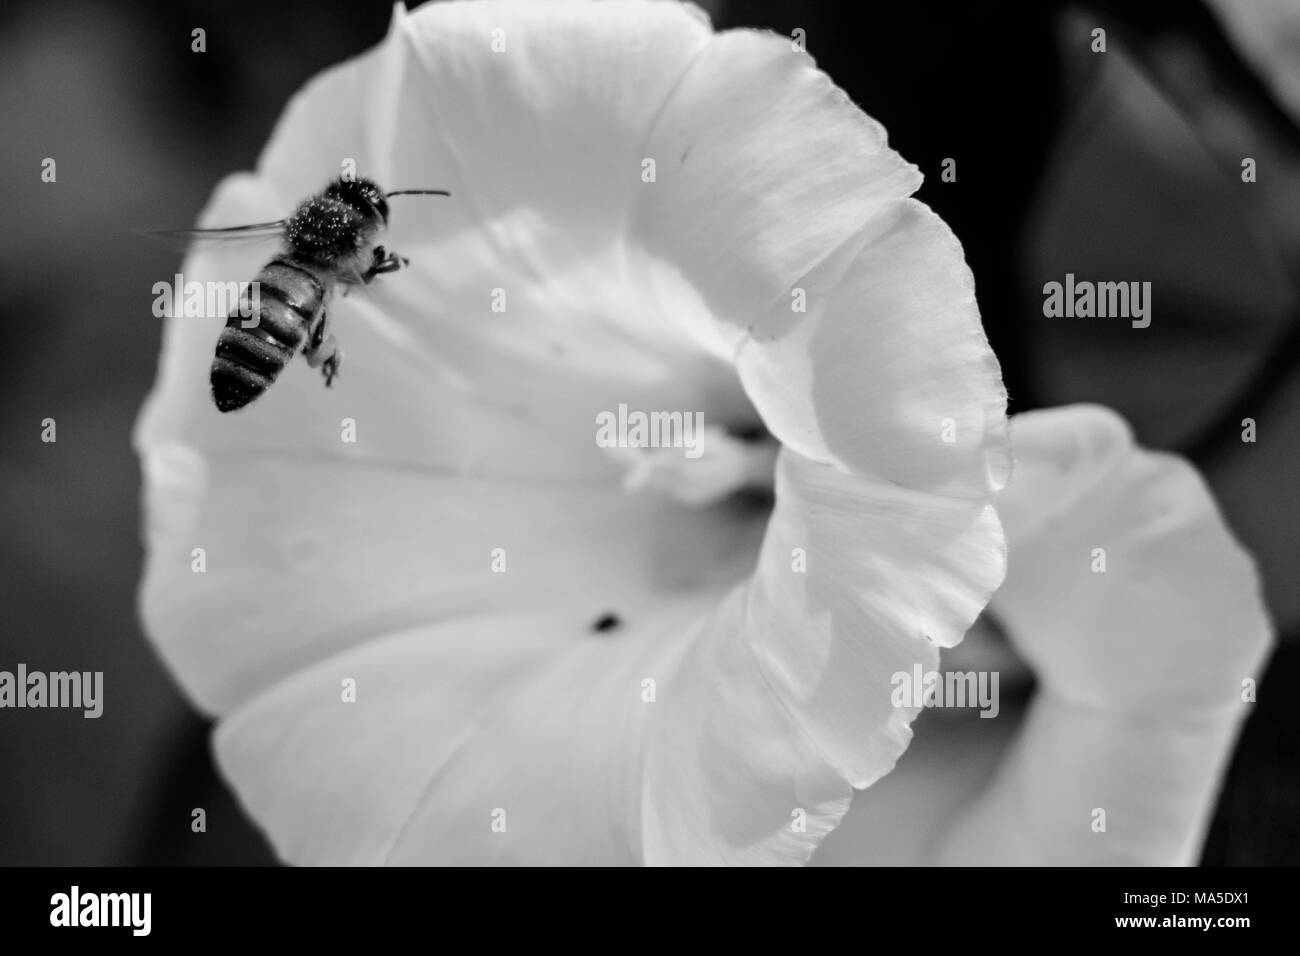 Biene nähert sich weiße Blüte, b/w Stockfoto